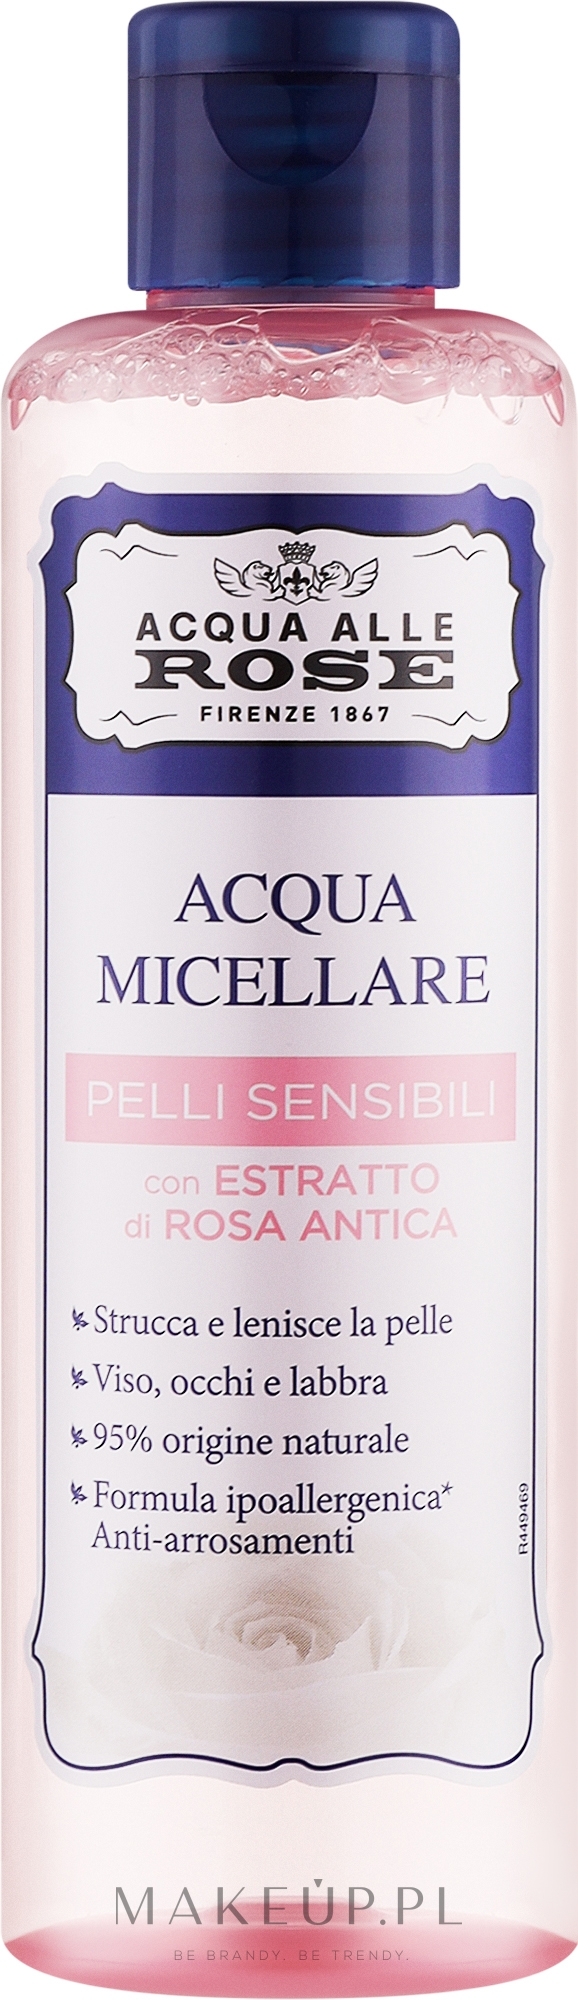 Płyn micelarny do skóry wrażliwej - Roberts Acqua alle Rose Micellar Water Sensitive — Zdjęcie 200 ml